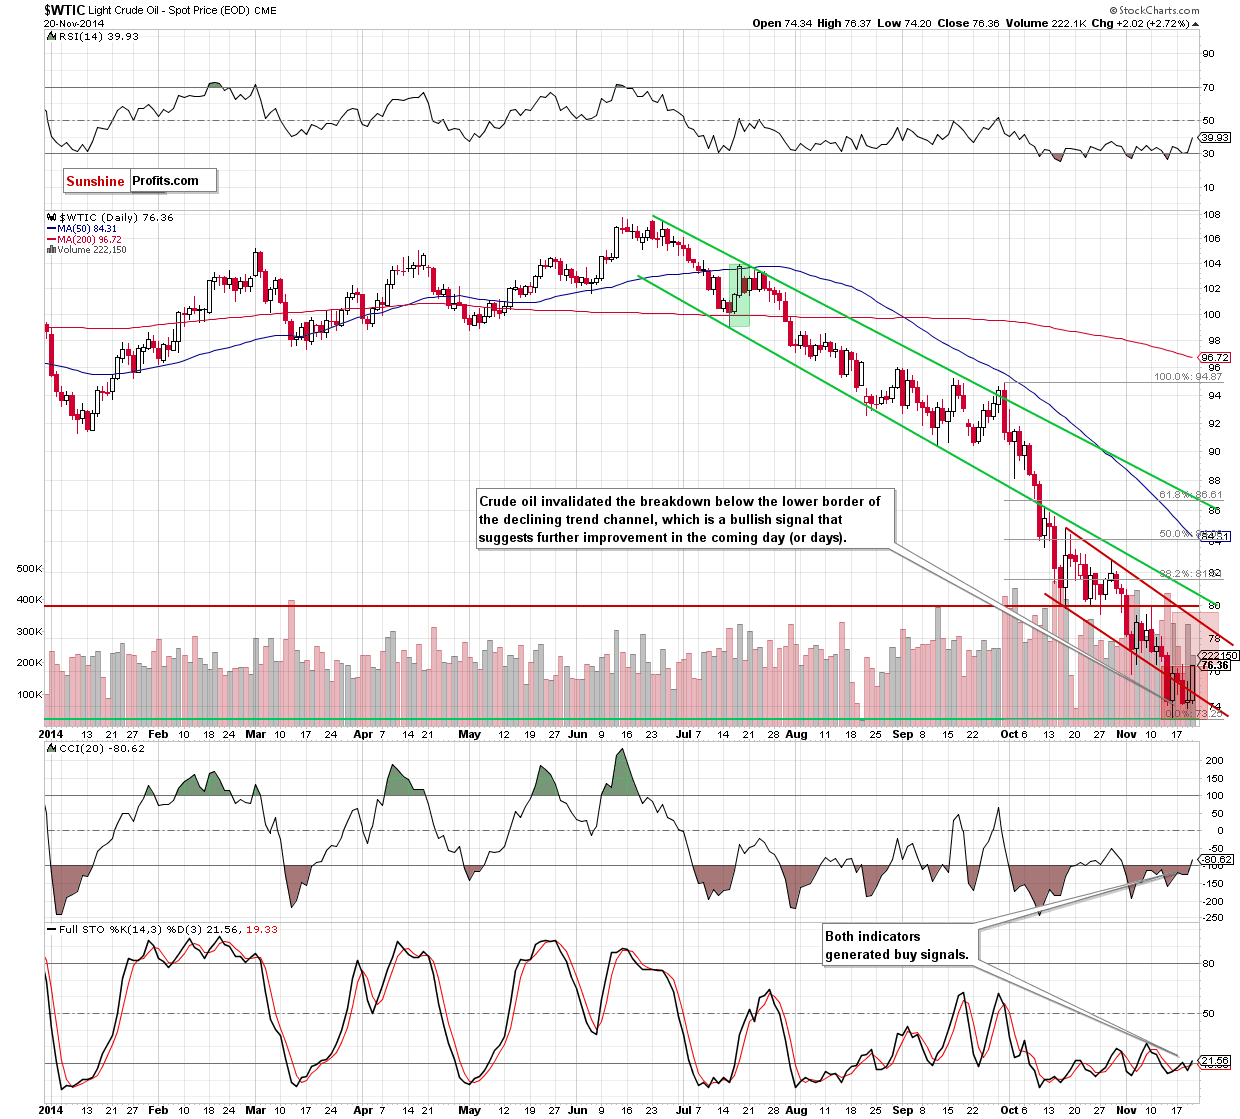 WTI Crude Oil daily chart